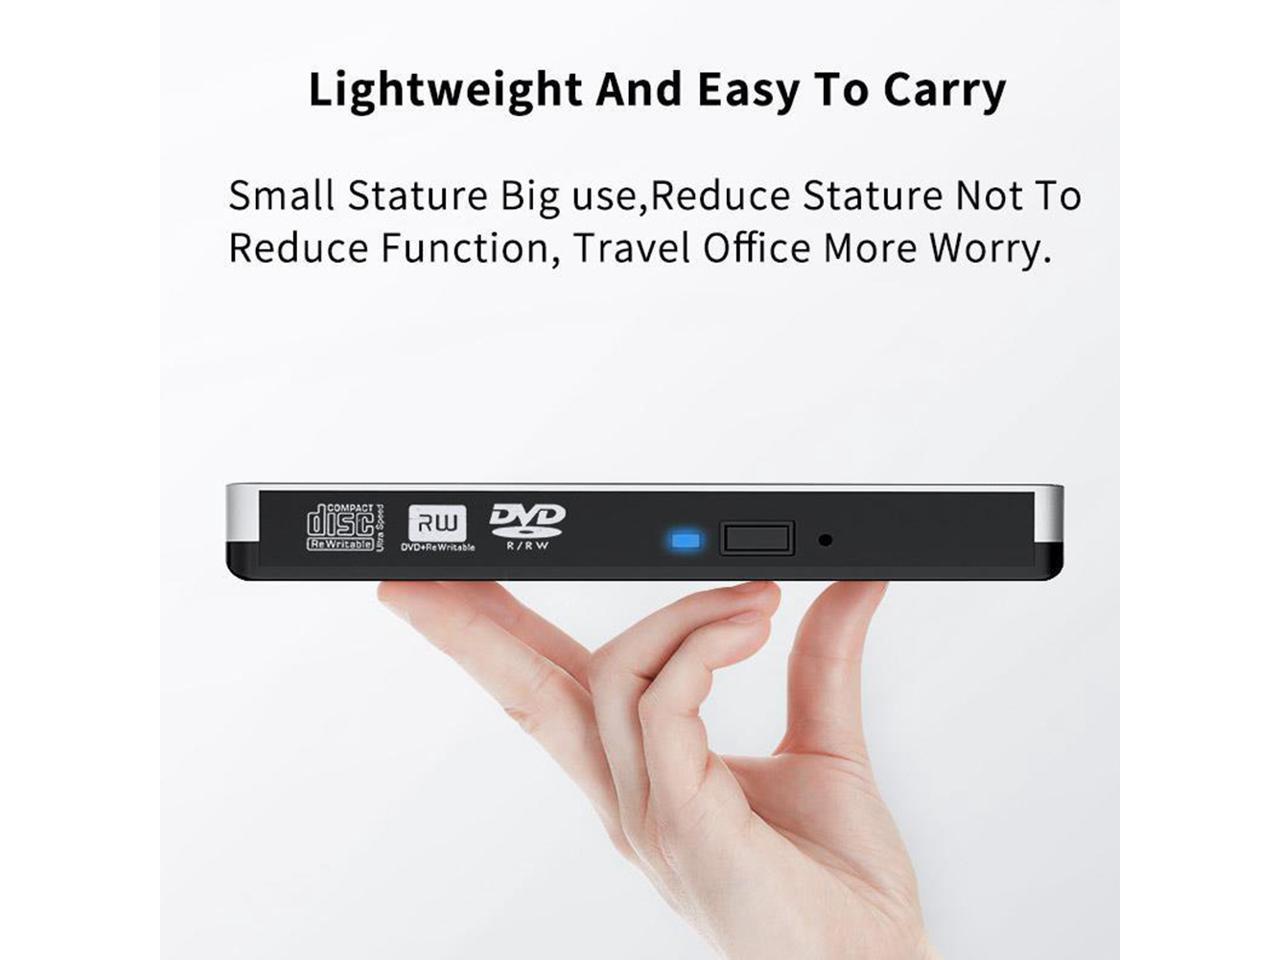 external dvd burner for mac mini